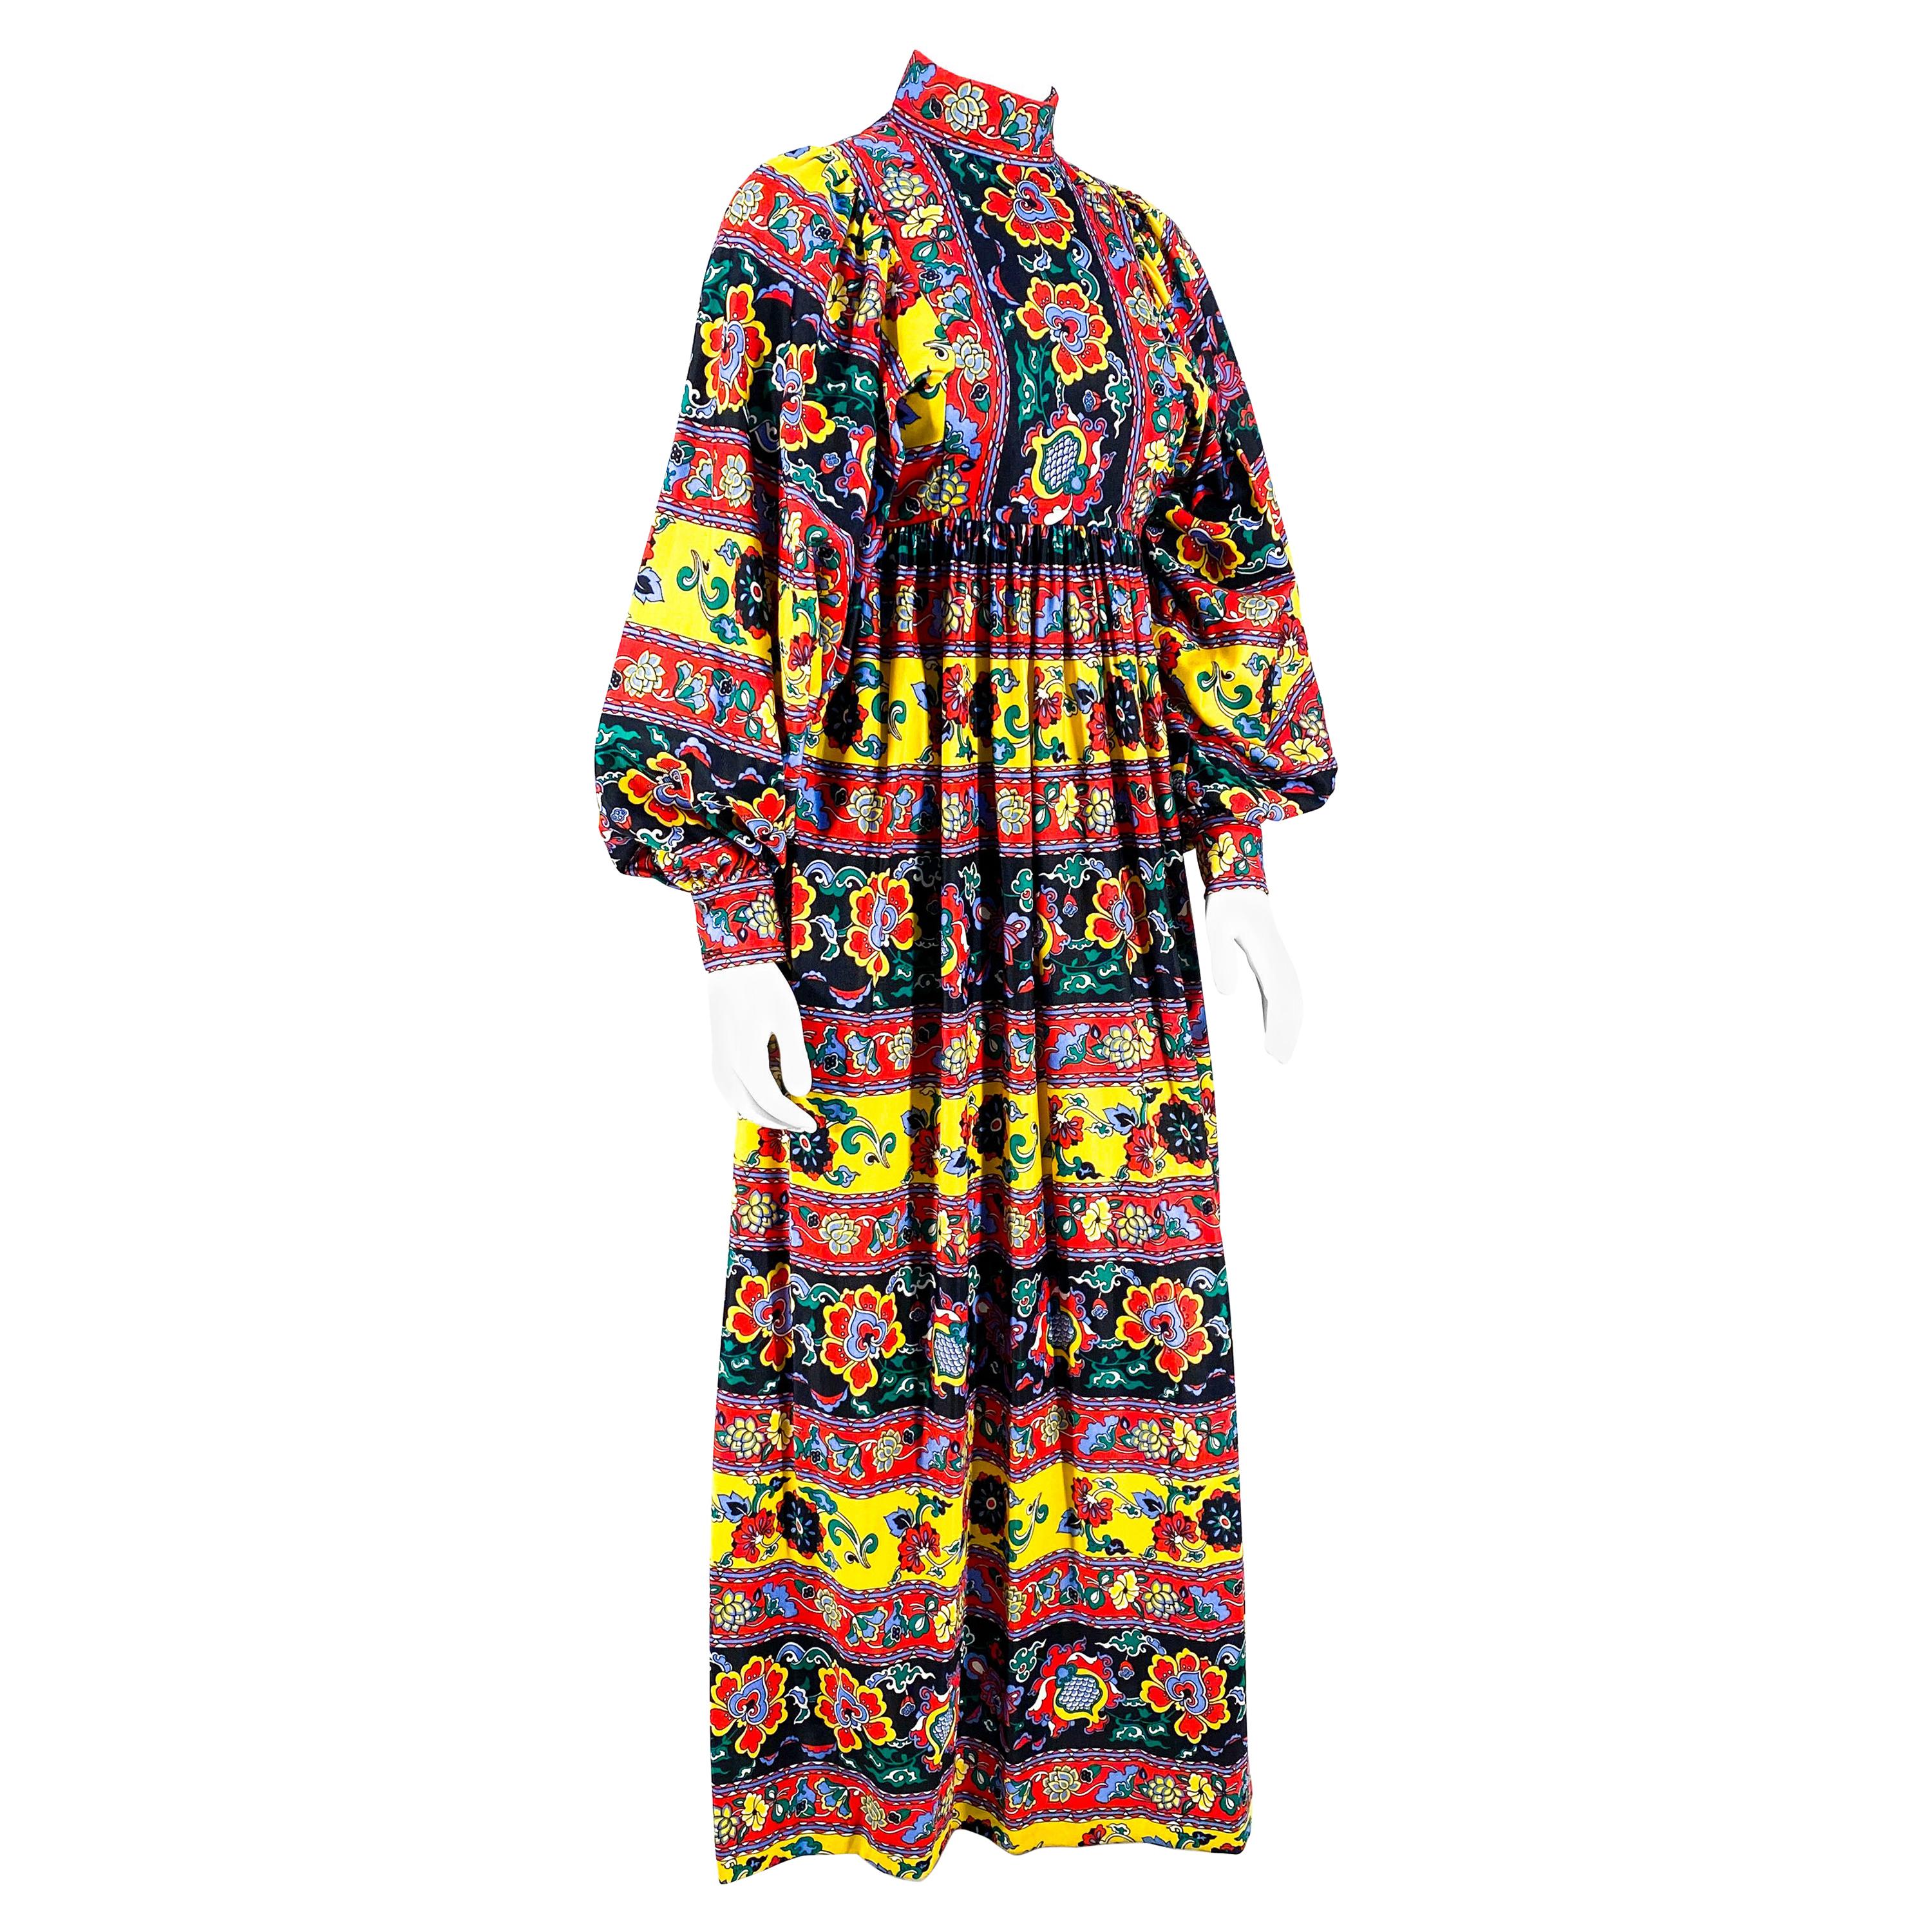 1970s Jewel-Toned Paisley Printed Peasant Dress